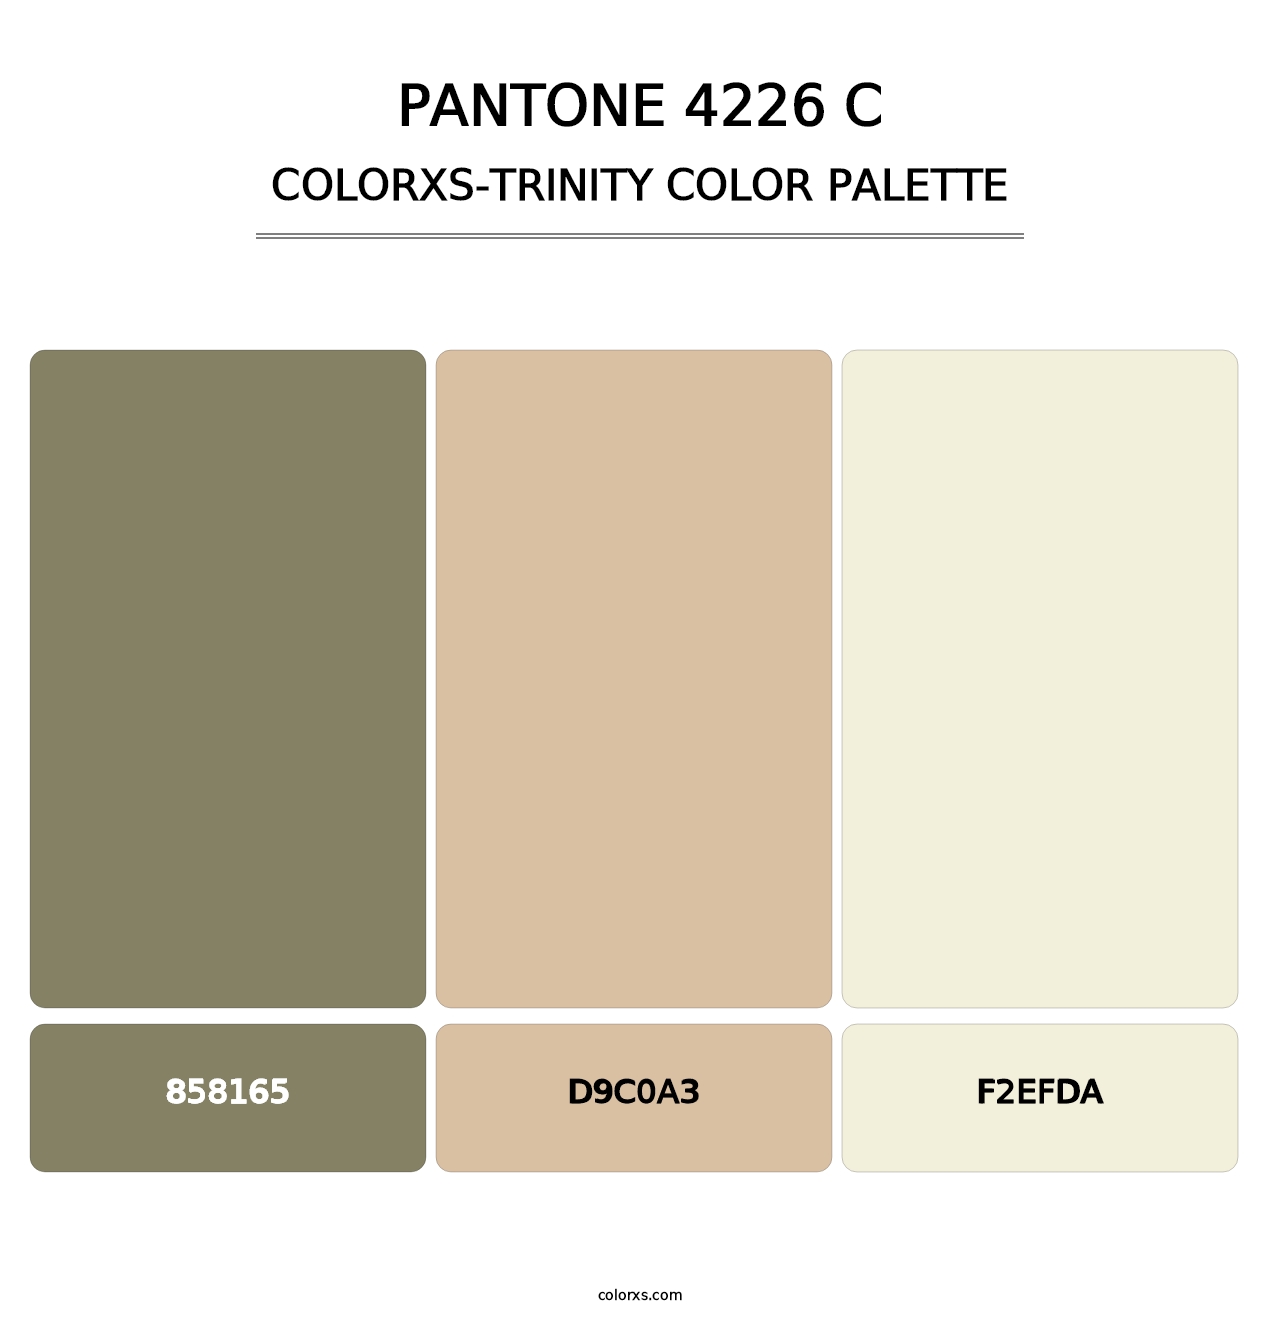 PANTONE 4226 C - Colorxs Trinity Palette